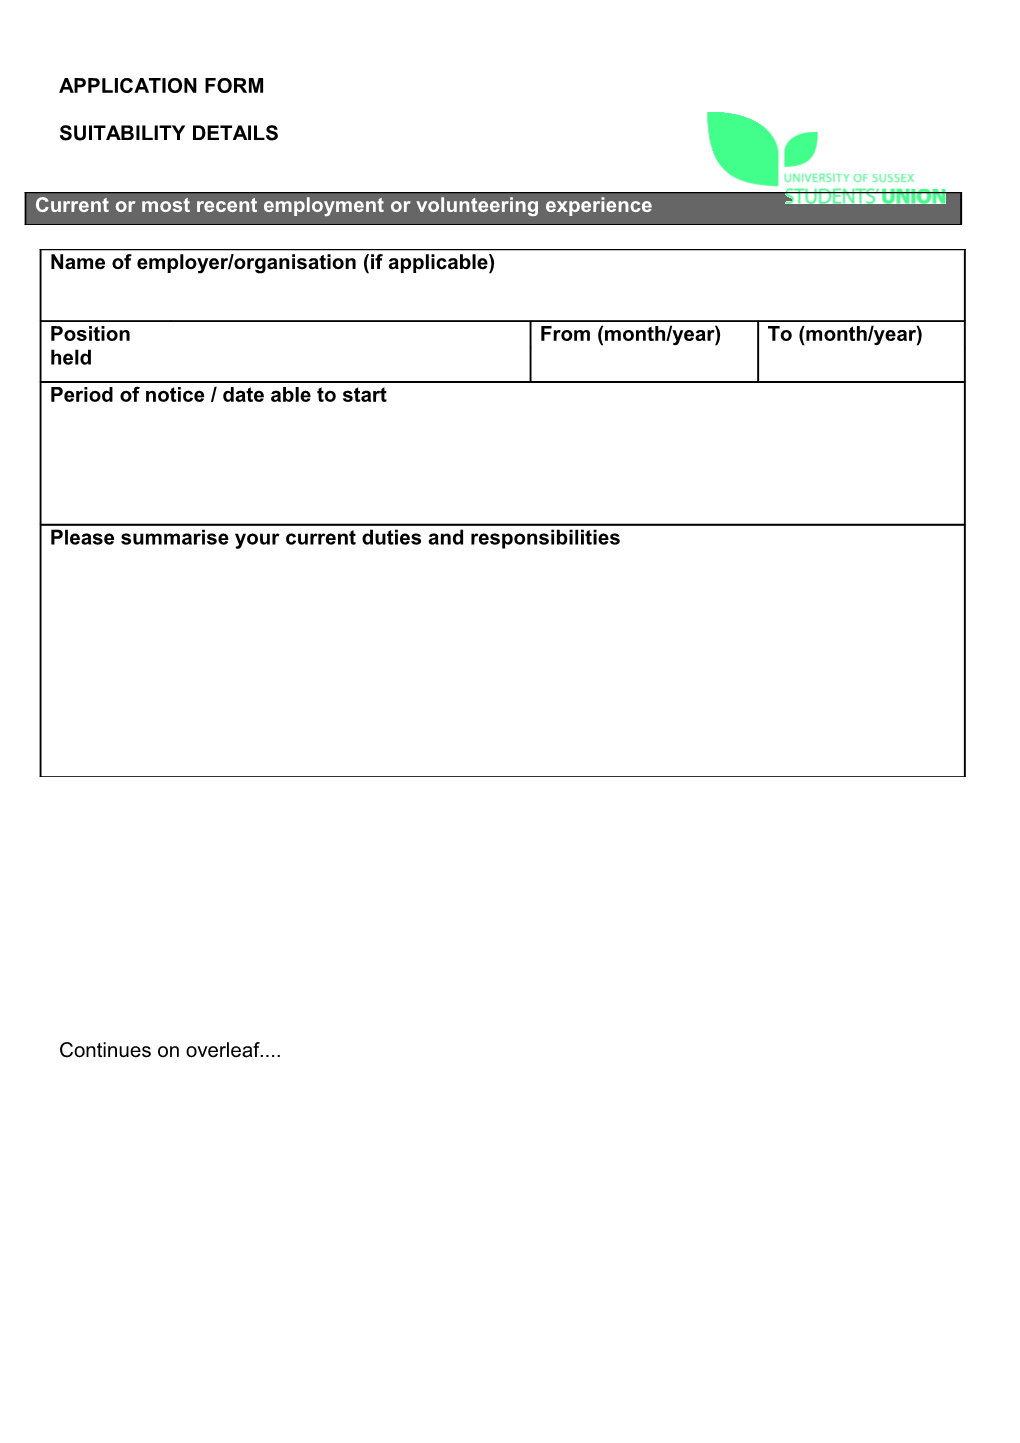 Application Form - Full 1415